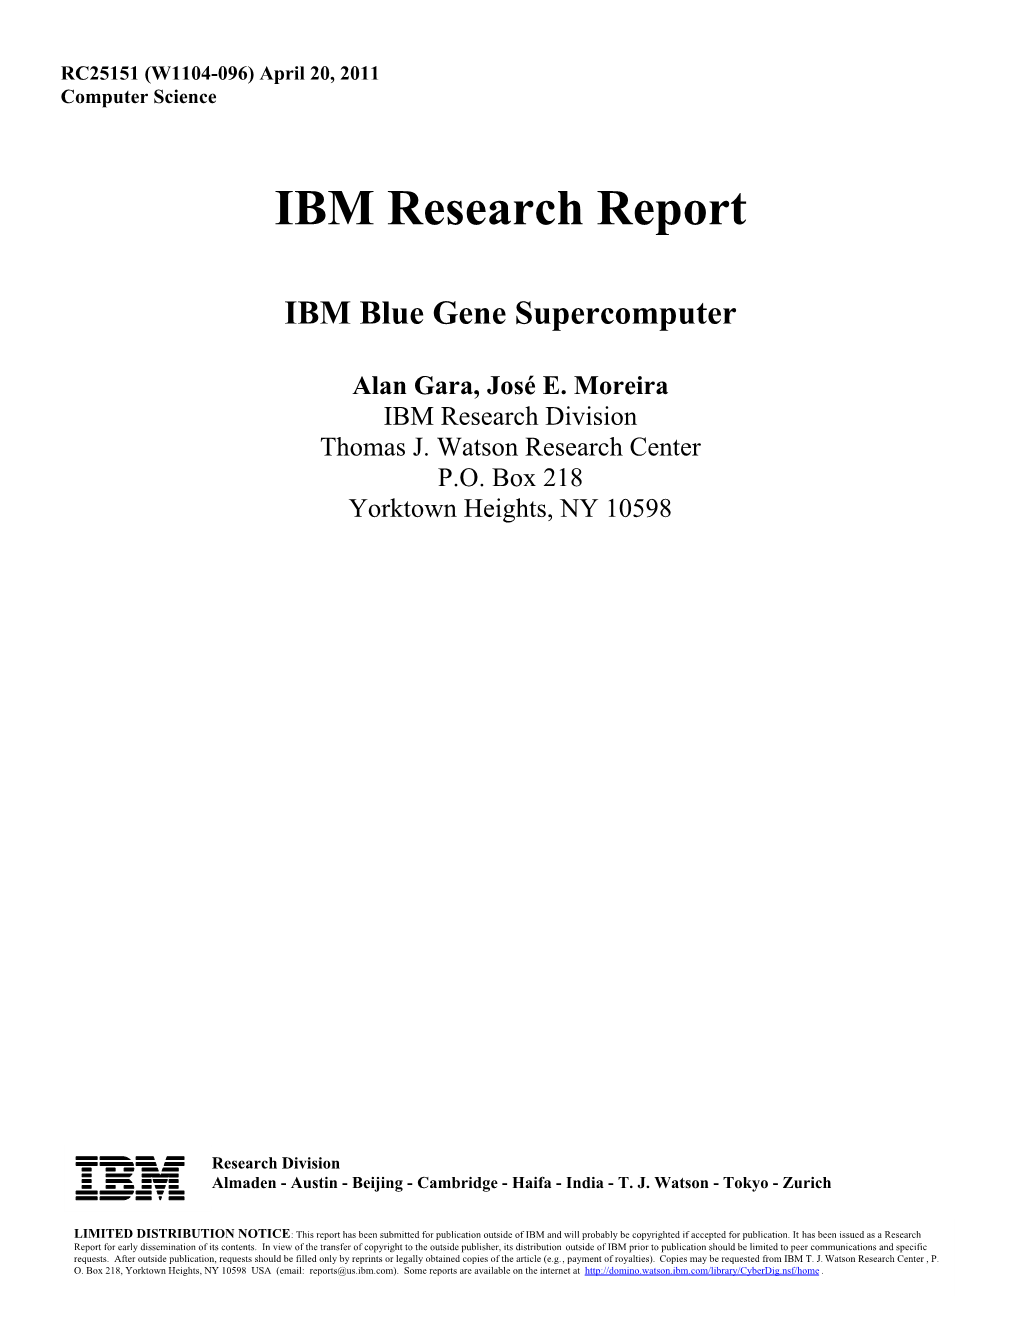 IBM Research Report IBM Blue Gene Supercomputer Alan Gara, José E